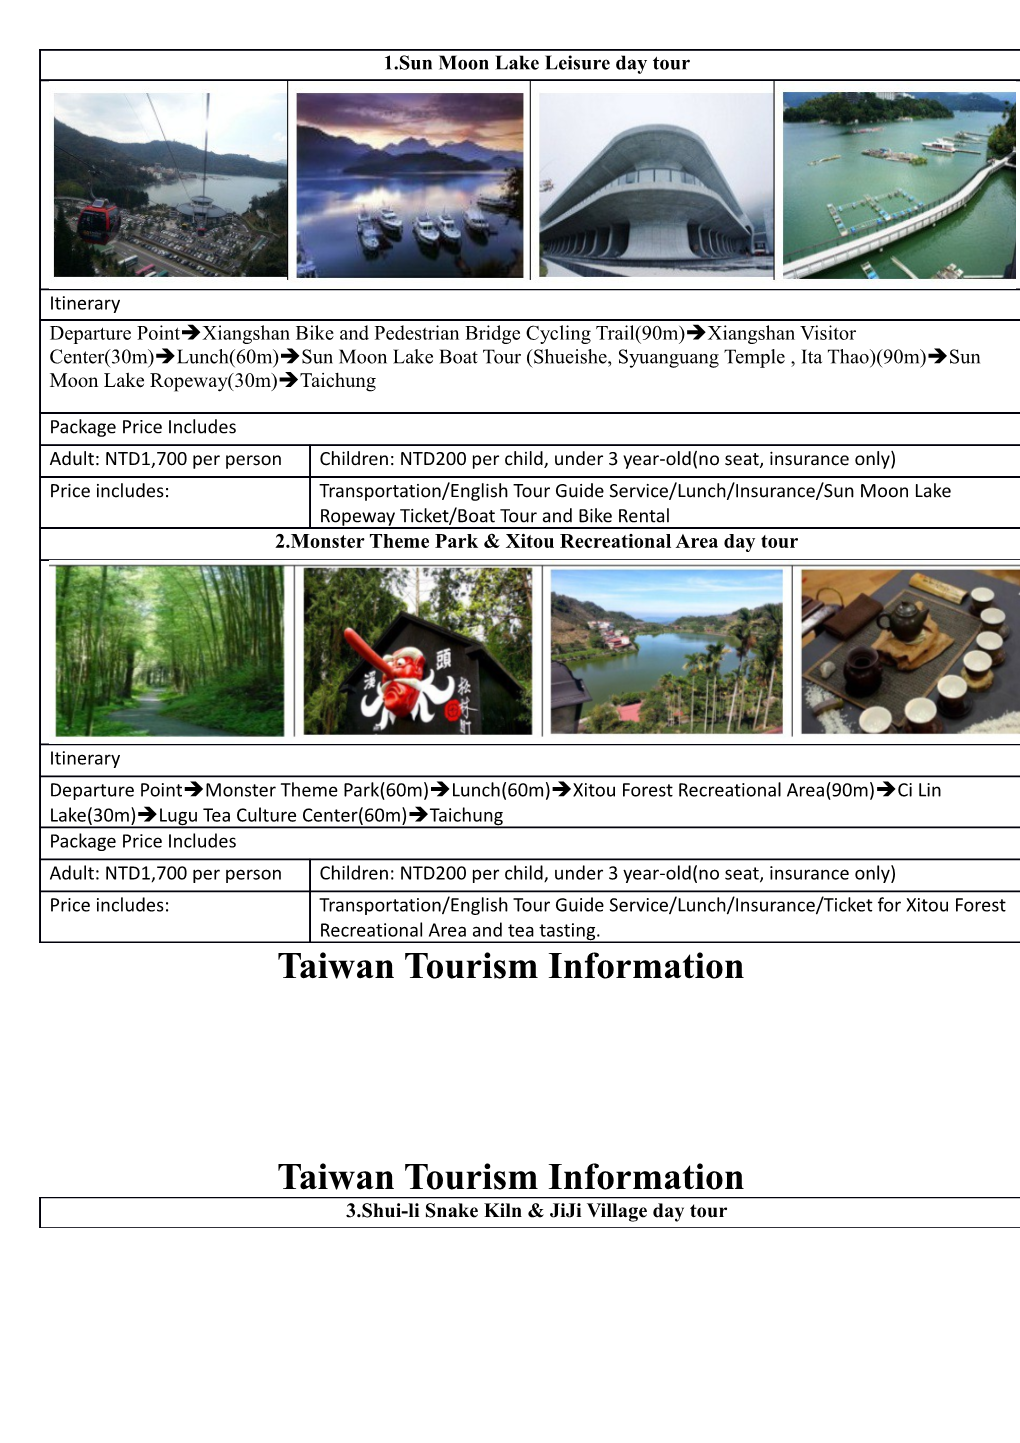 Taiwan Tourism Information